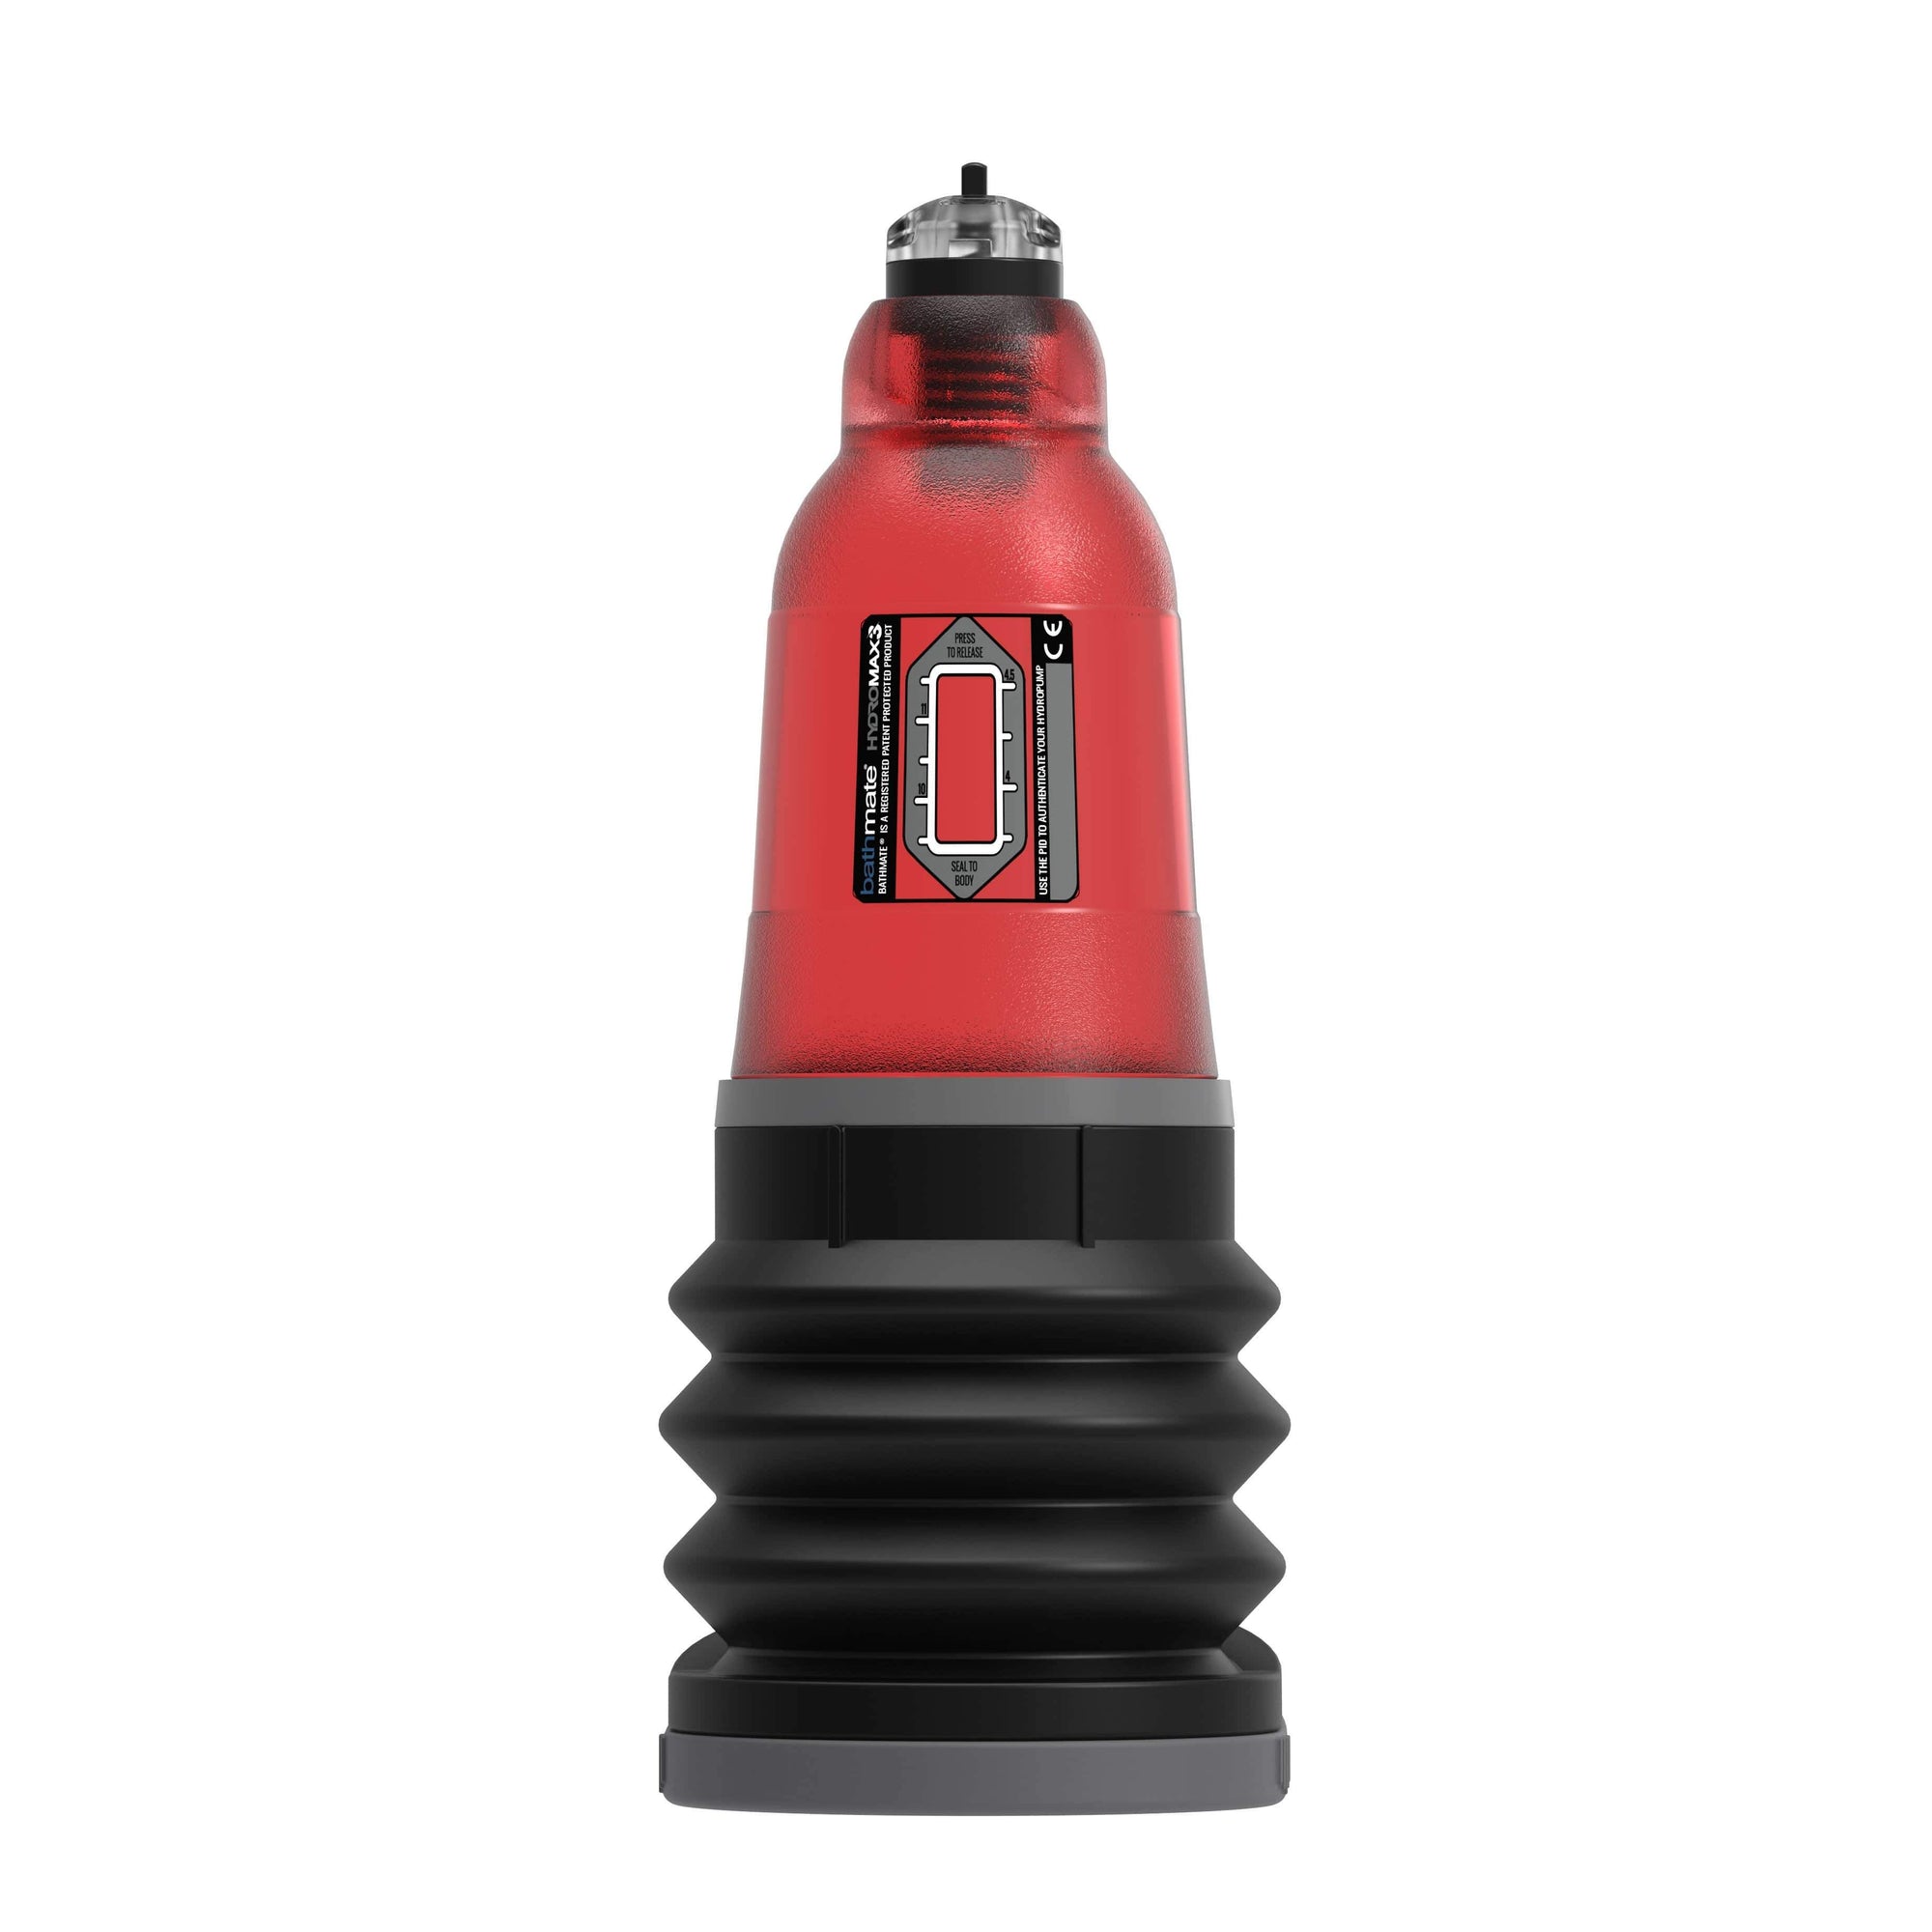 Bathmate - Hydromax 3 Penis Pump (Red) Penis Pump (Non Vibration)